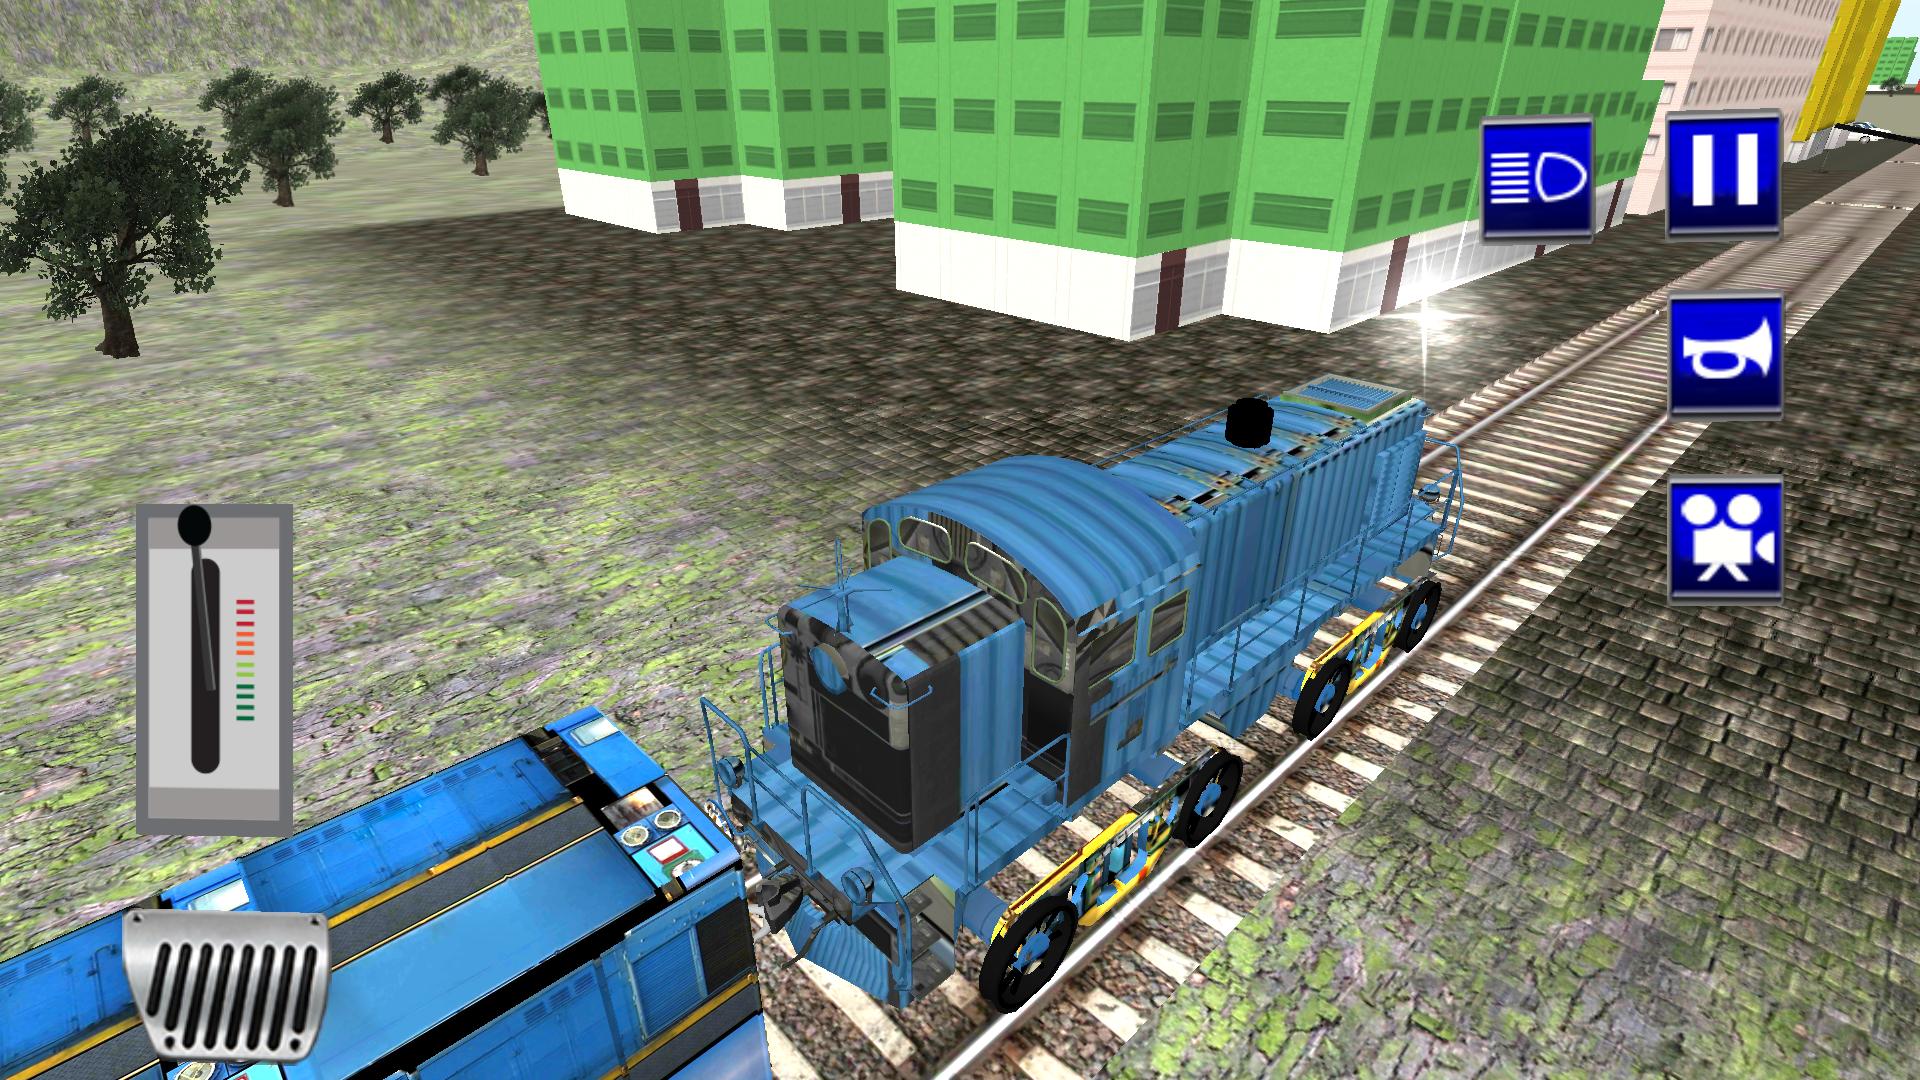 Train game simulator. ЖД симулятор 2д. Симуляторы про поезда и железные дороги. Skyrail симулятор поезда СНГ. Транс симулятор поезда игра 2d.